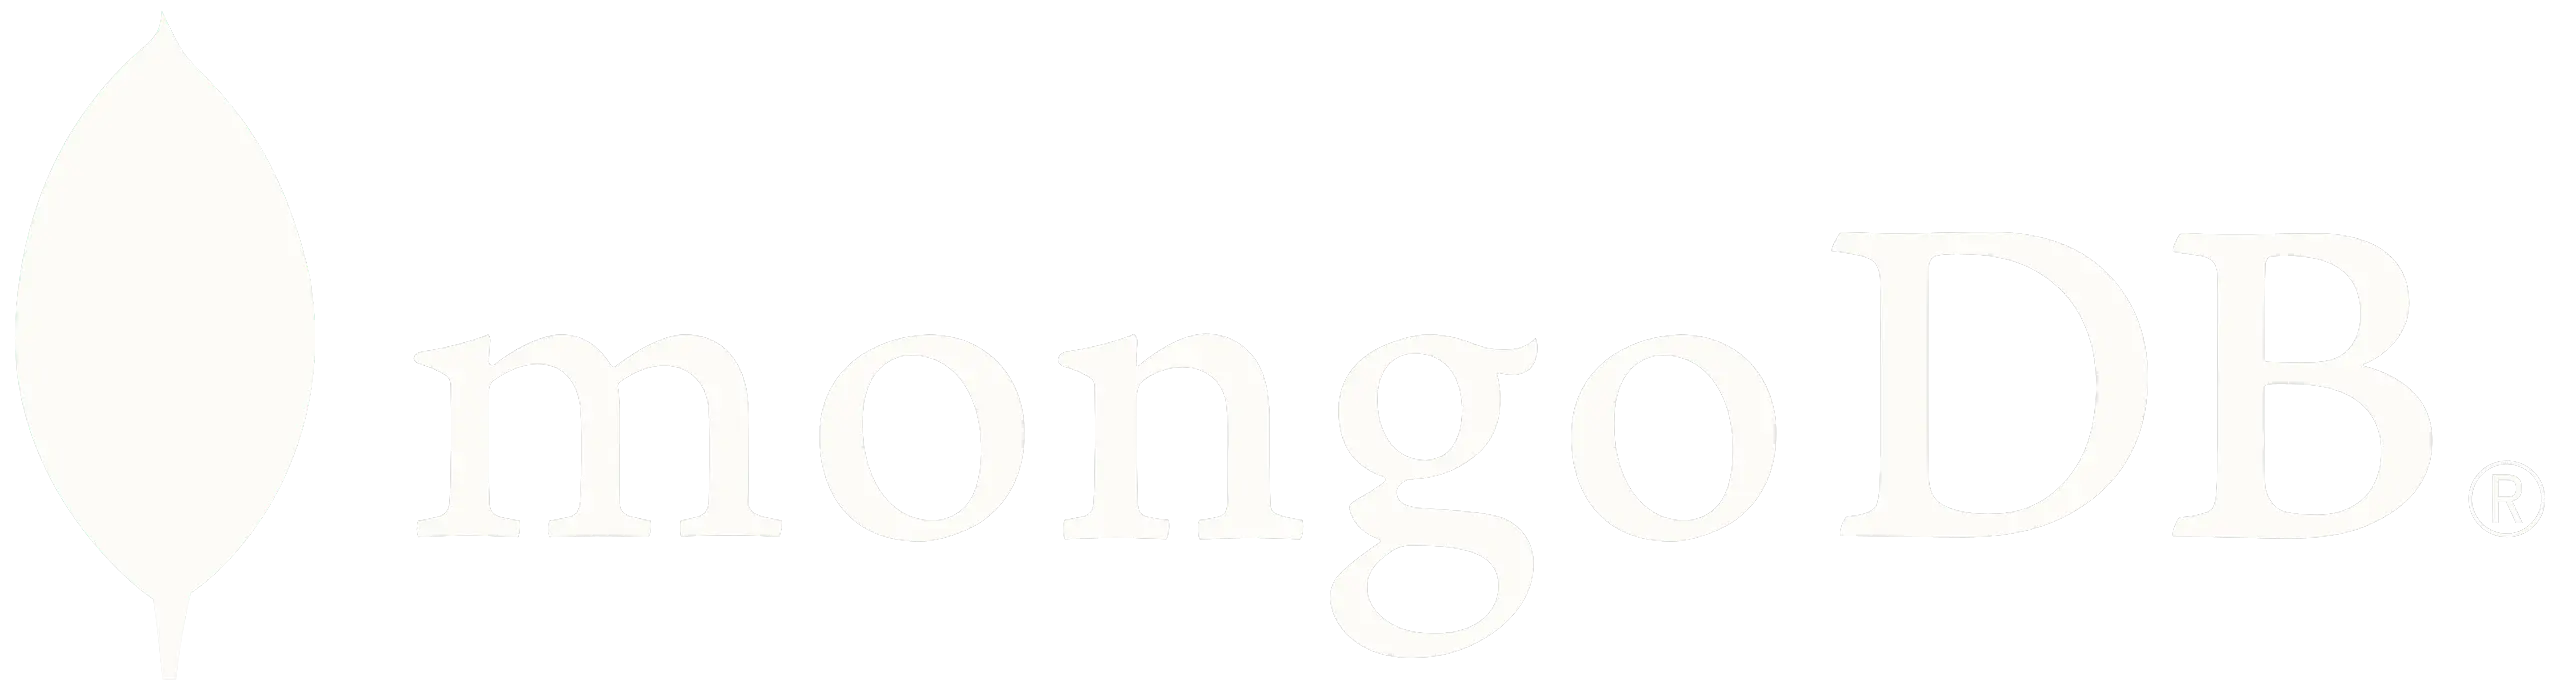 MongoDB logo.